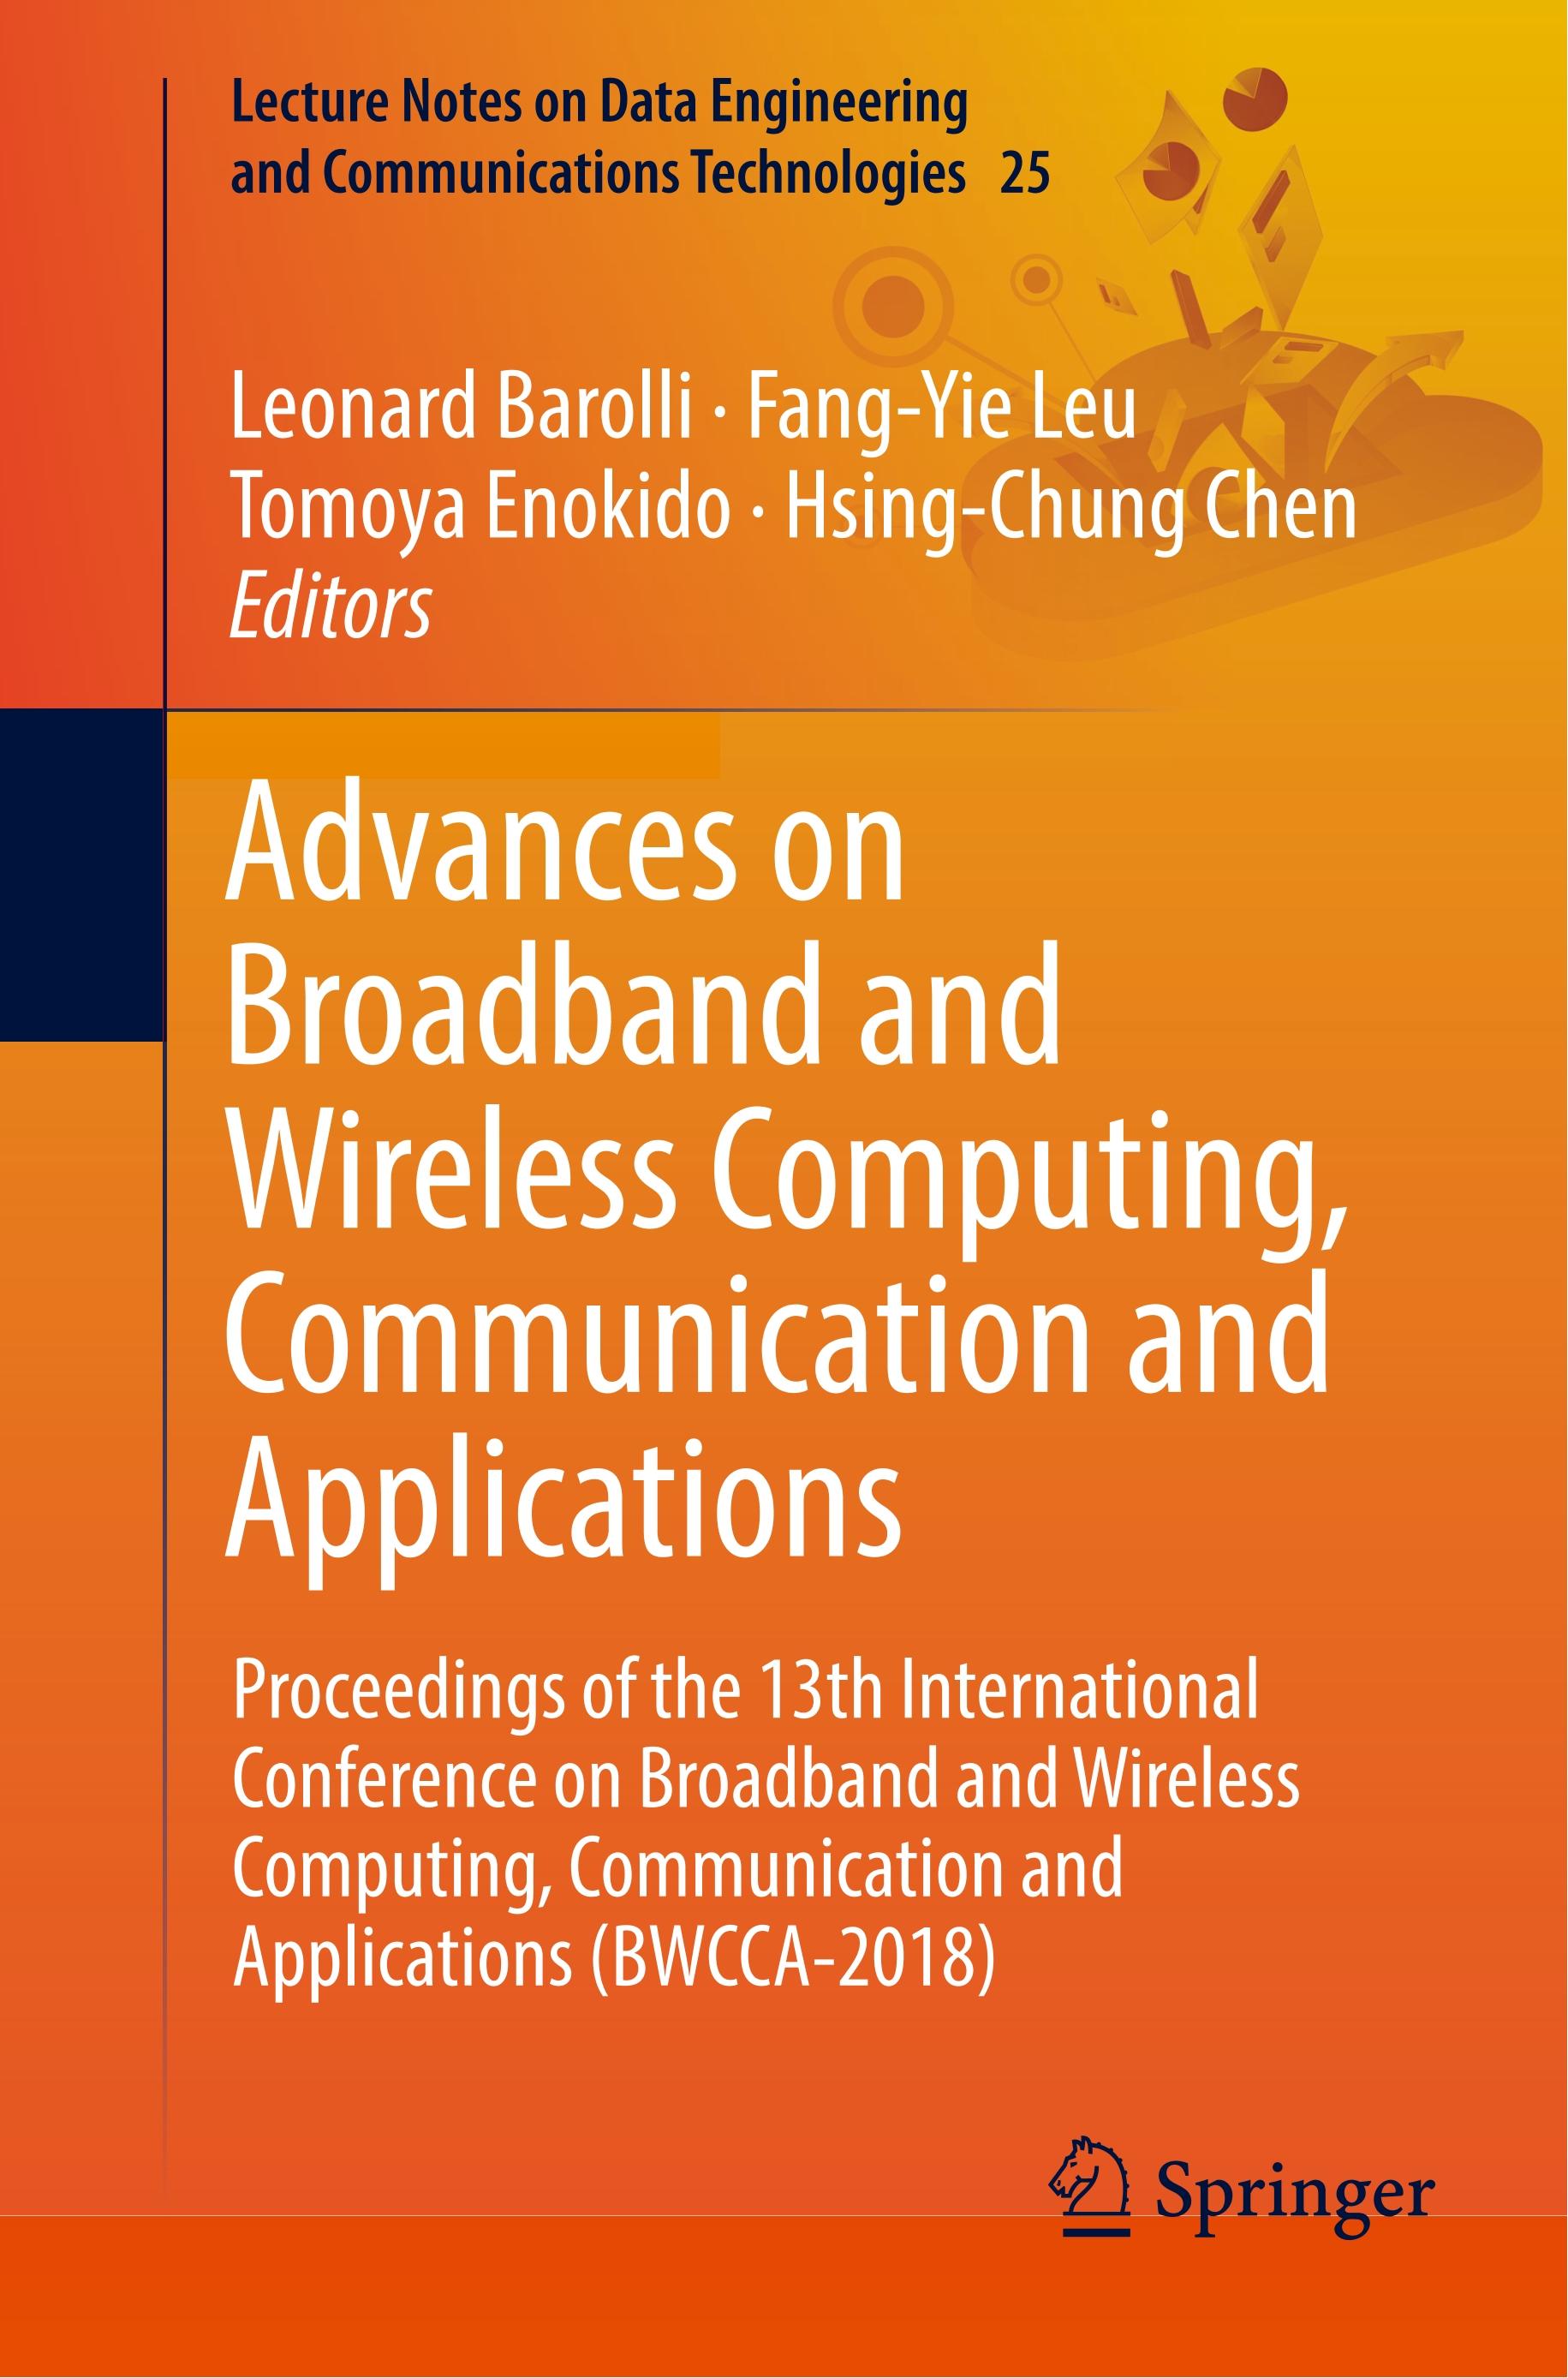 Advances on Broad-Band Wireless Computing, Communication and Applications - Barolli, Leonard|Leu, Fang-Yie|Enokido, Tomoya|Chen, Hsing-Chung